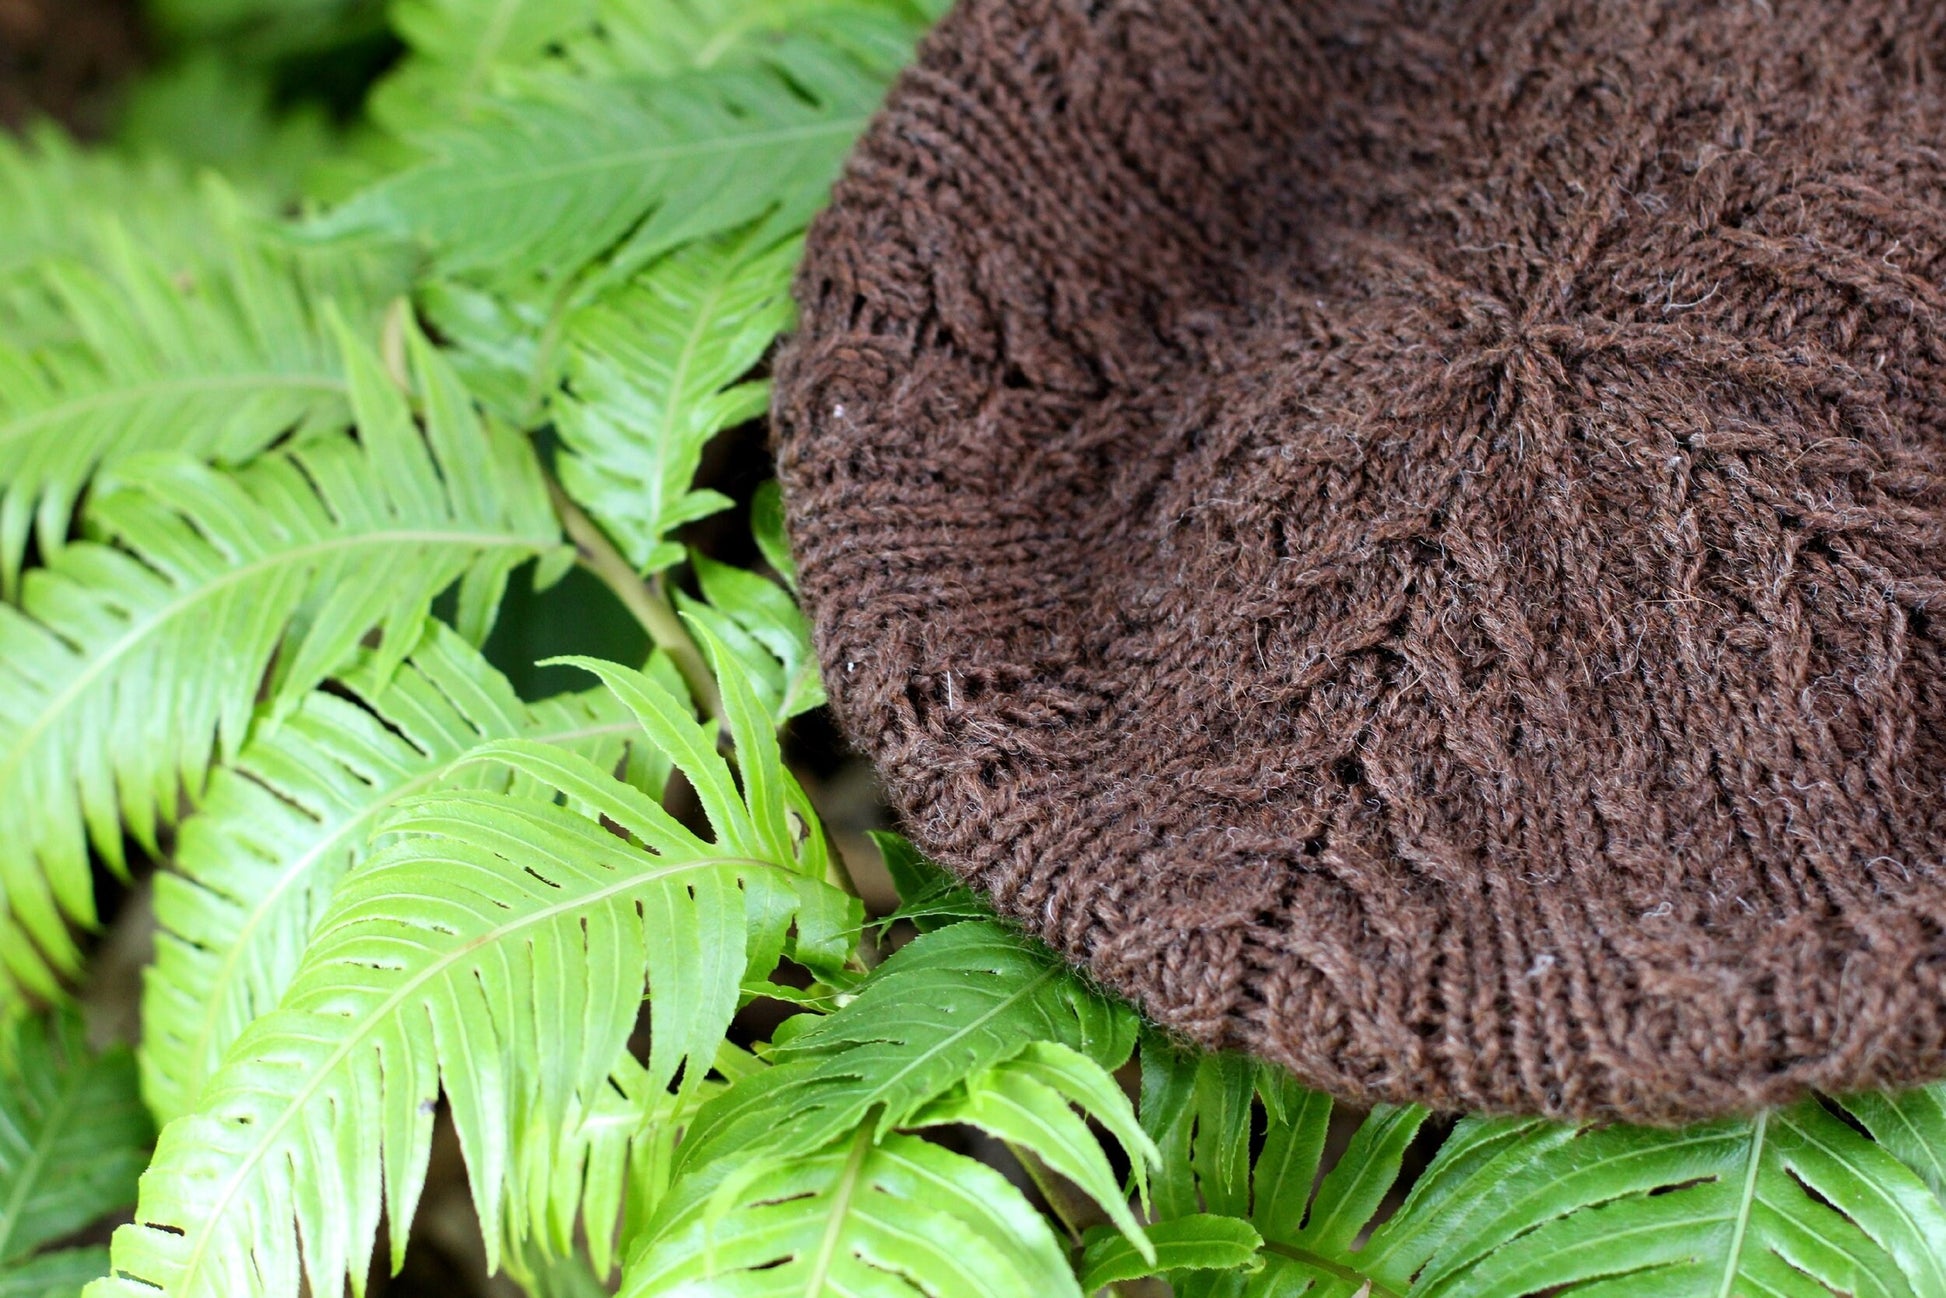 Nature Inspired Hat for Women Knitting Pattern • Ferns Hat • Intermediate Knitting Pattern PDF